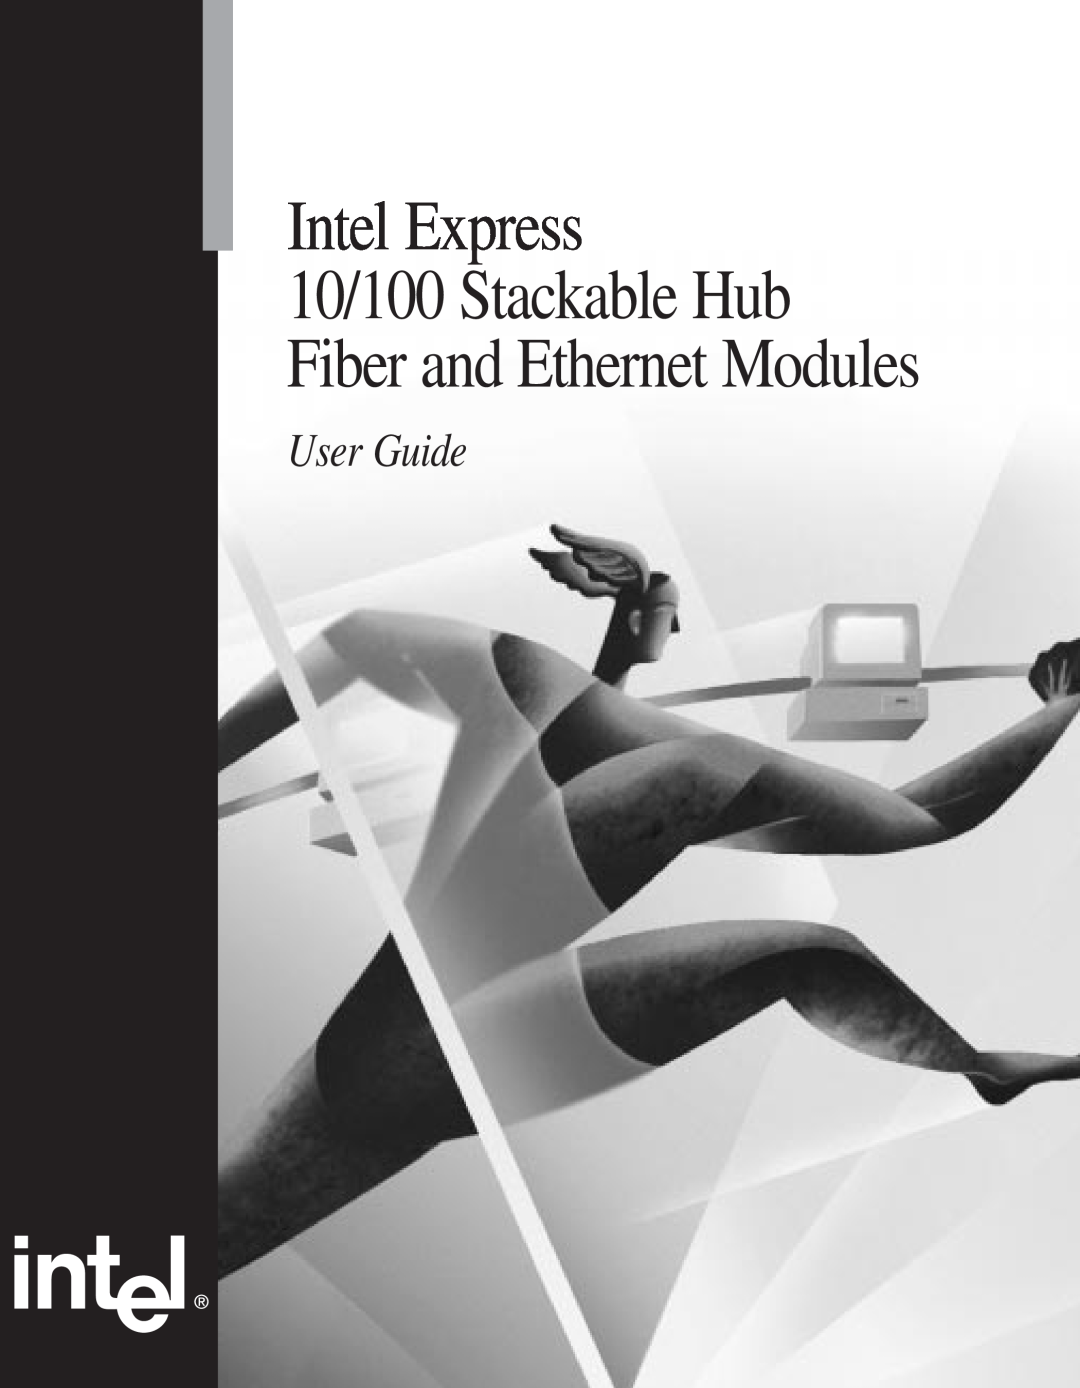 Intel EE110EM manual Intel Express 10/100 Stackable Hub, Fiber and Ethernet Modules, User Guide 